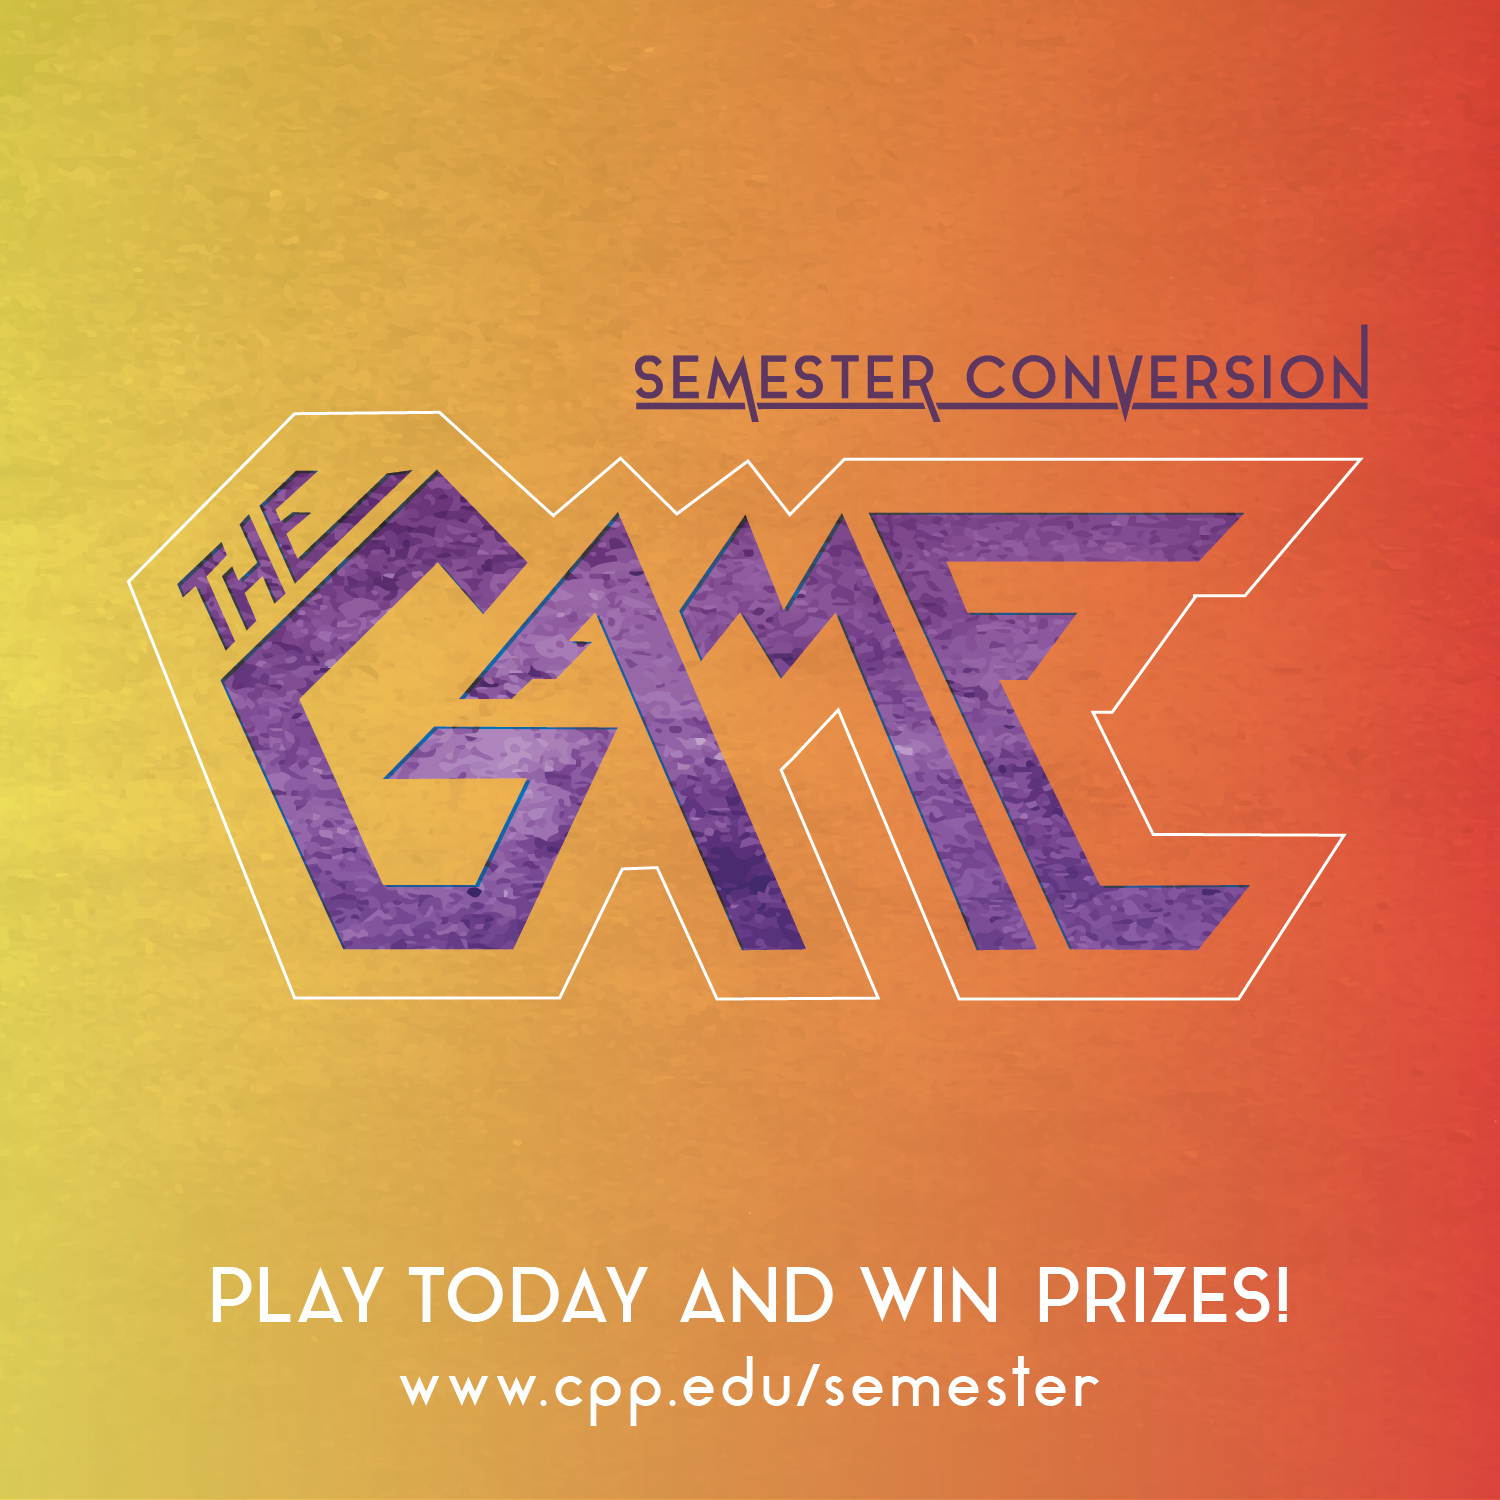 Semester Conversion: The Game